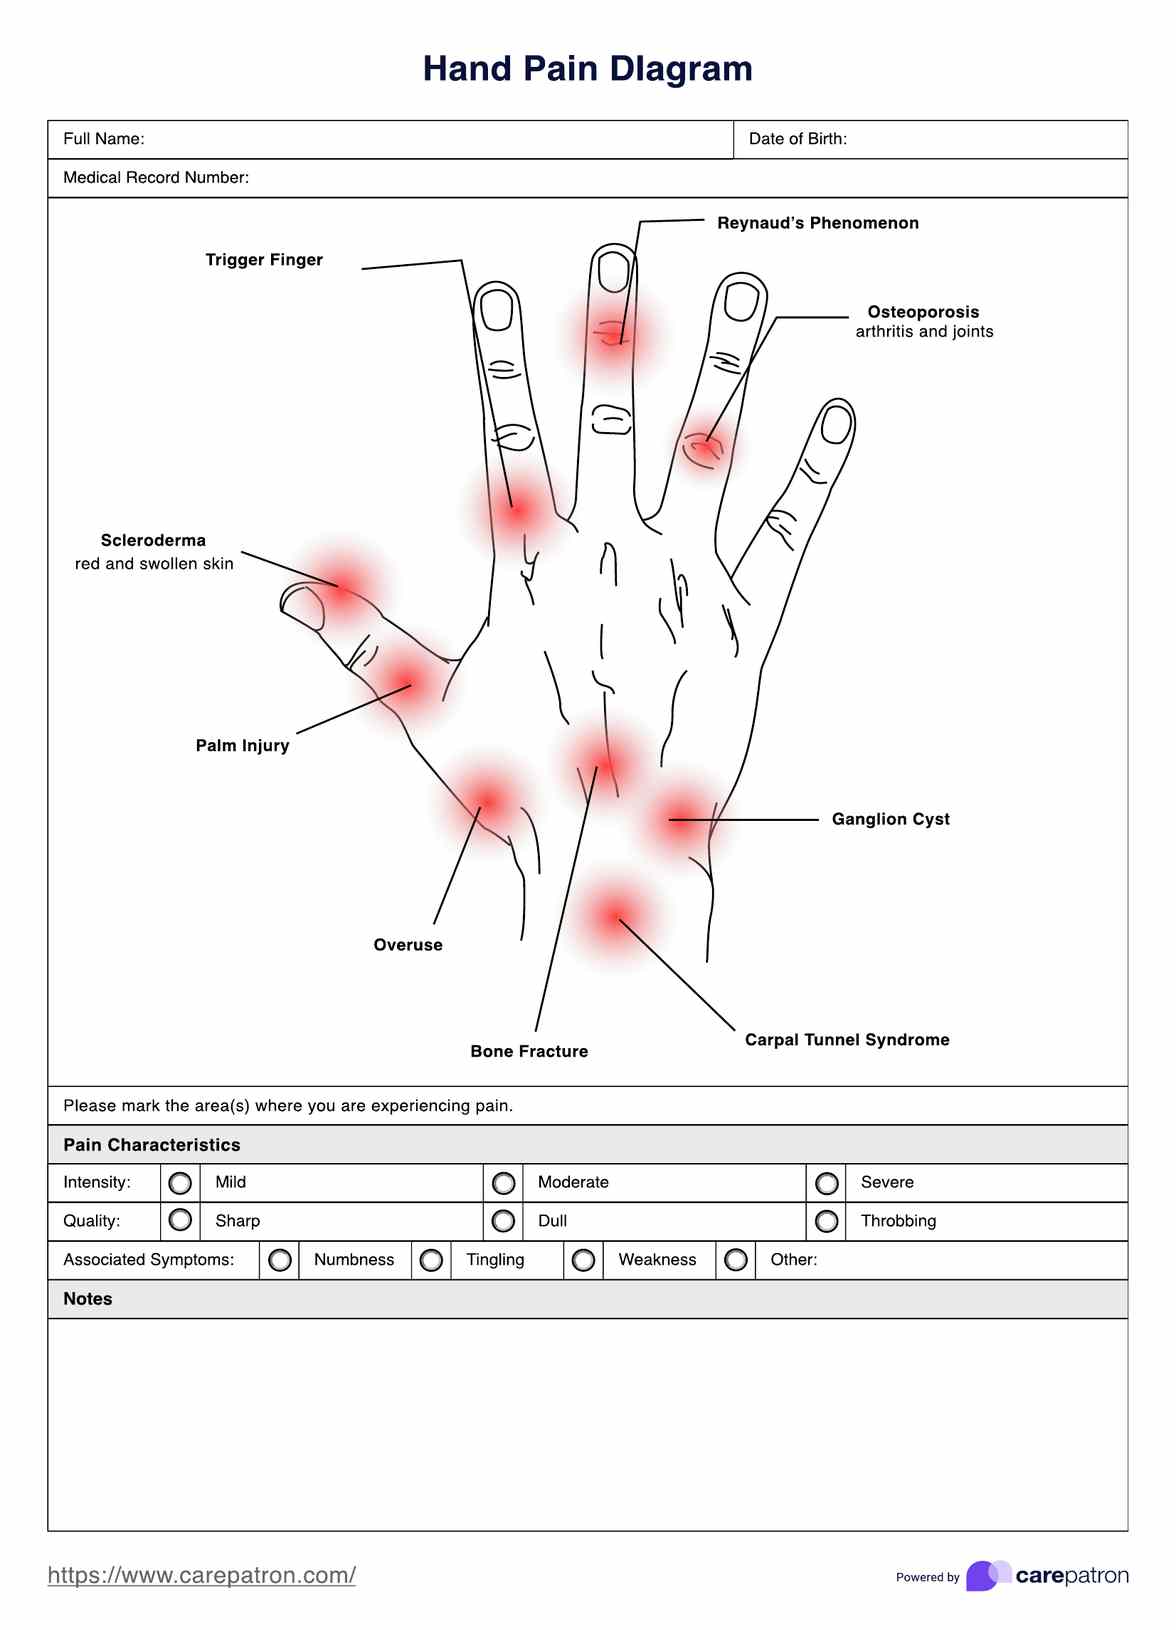 Hand Pain Diagrams PDF Example